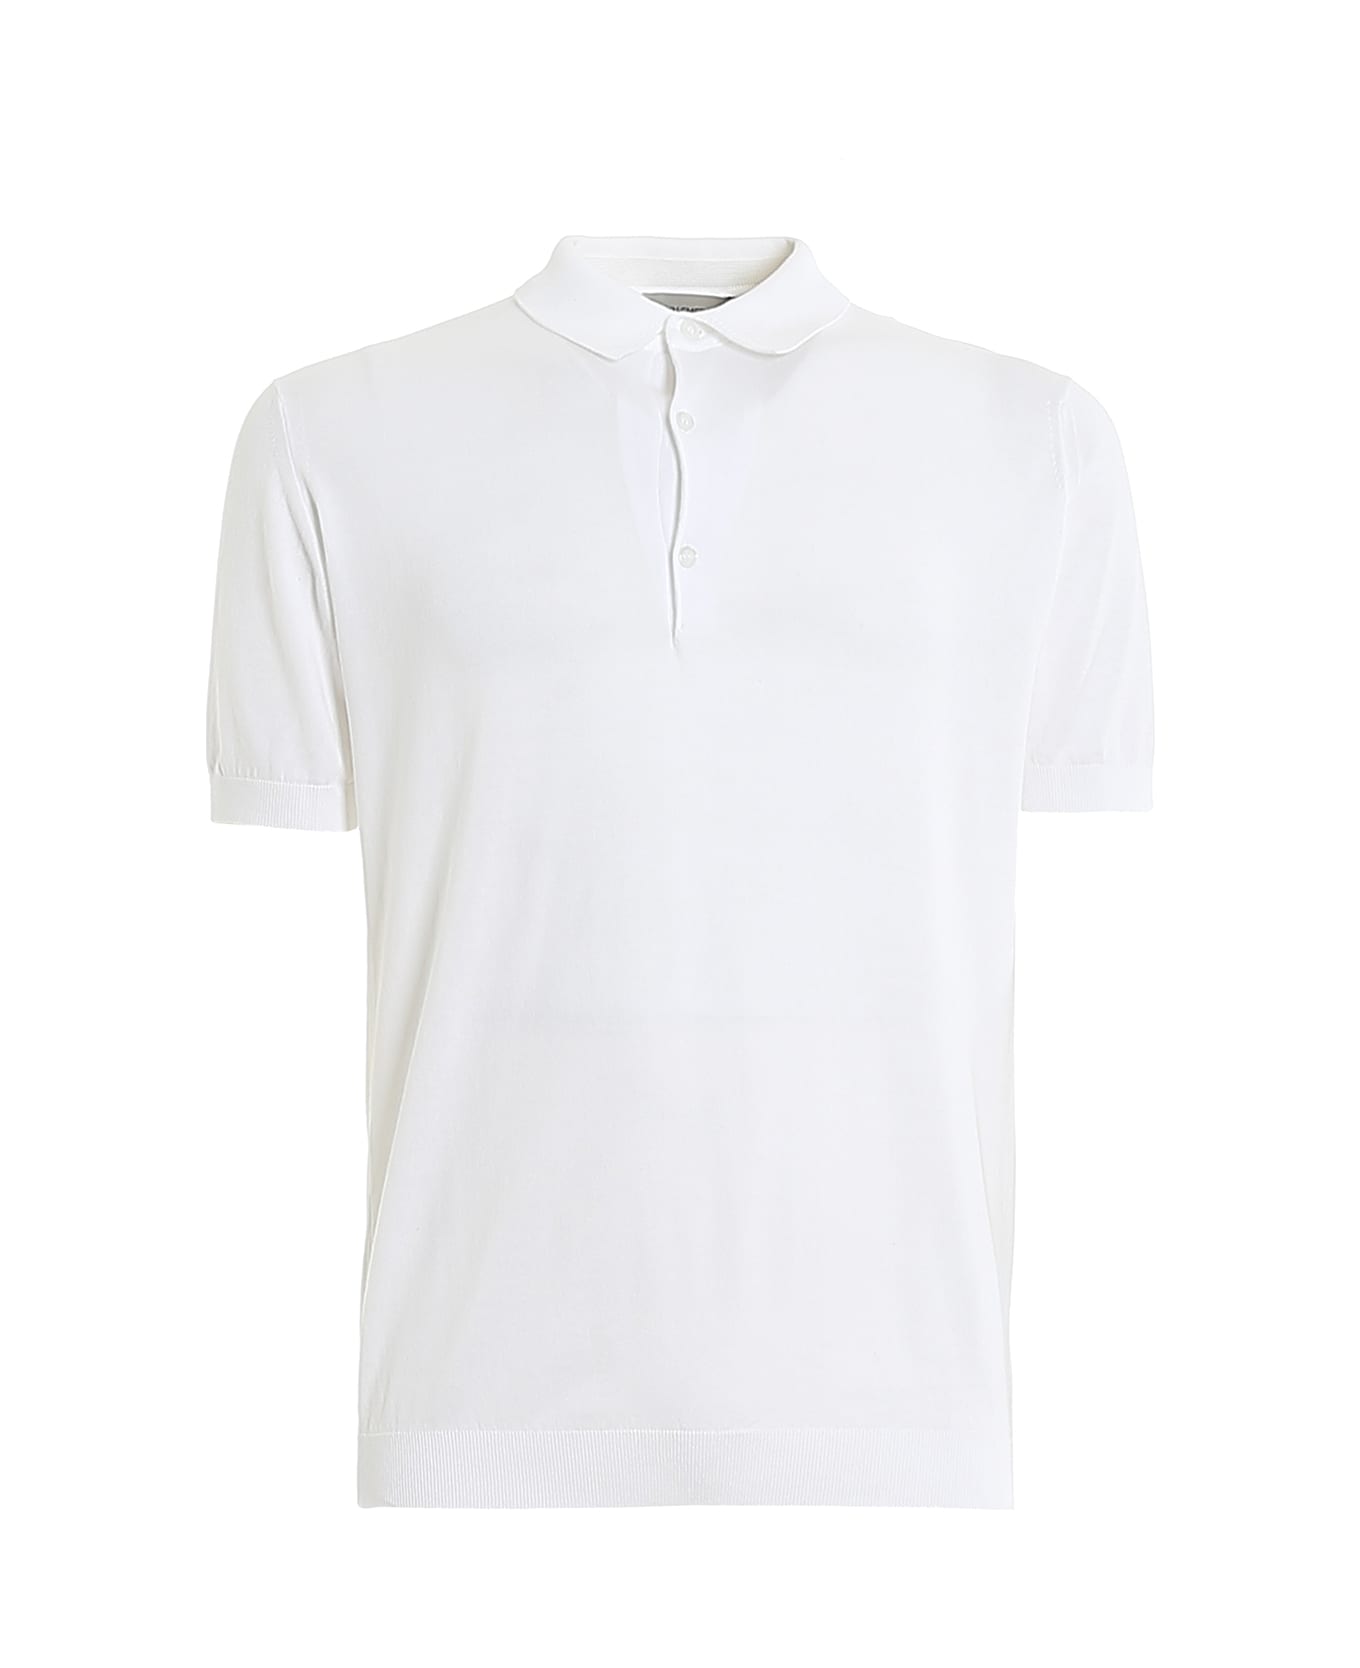 John Smedley Adrian Shirt Ss - White